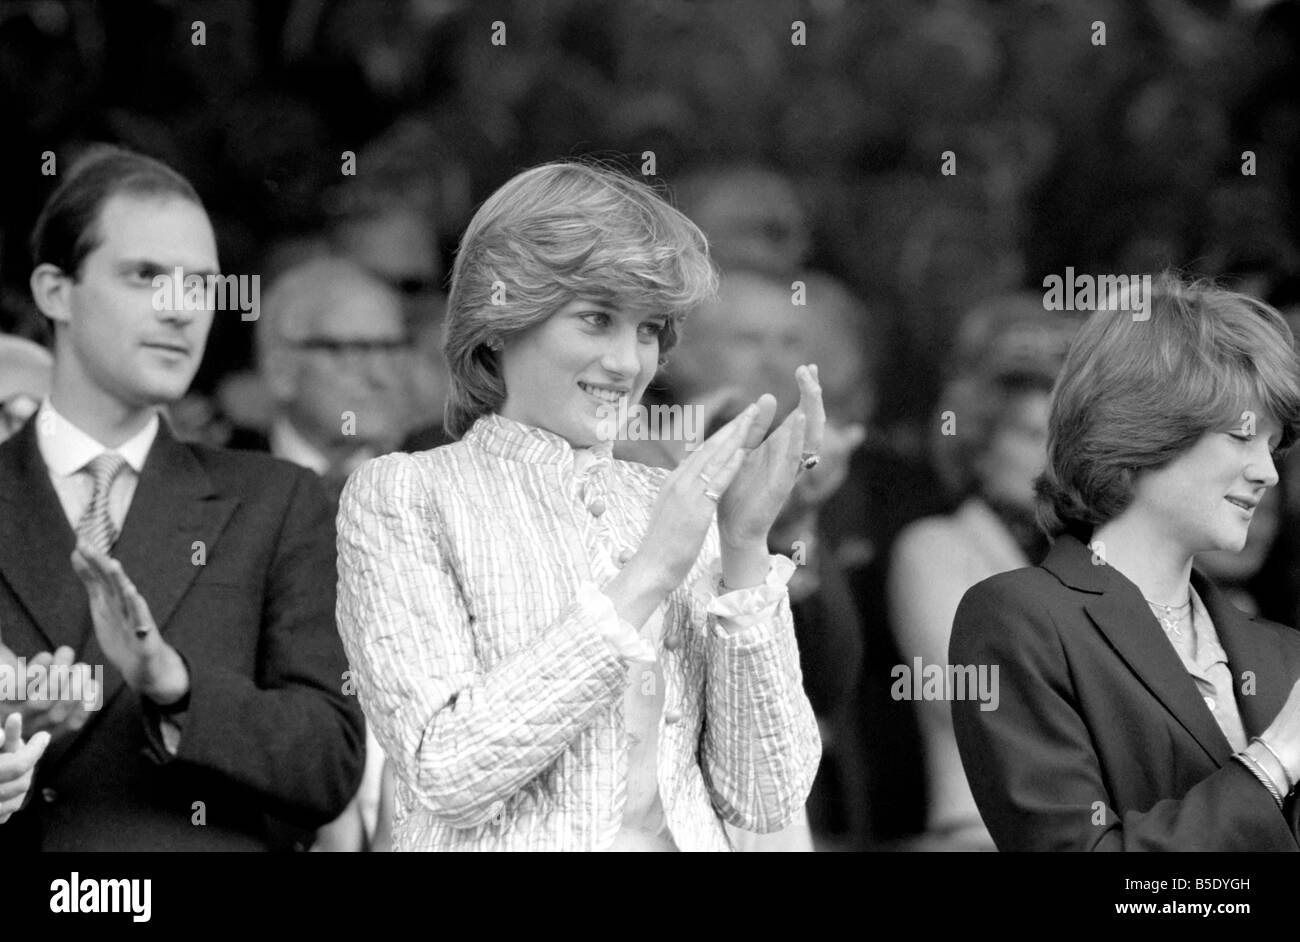 Tournoi de tennis de Wimbledon. 1981 Womens finales. Chris Evert Lloyd c. Hana Mandlikova. L'observation de la princesse Diana. Juillet 1981 81-3782-063 Banque D'Images